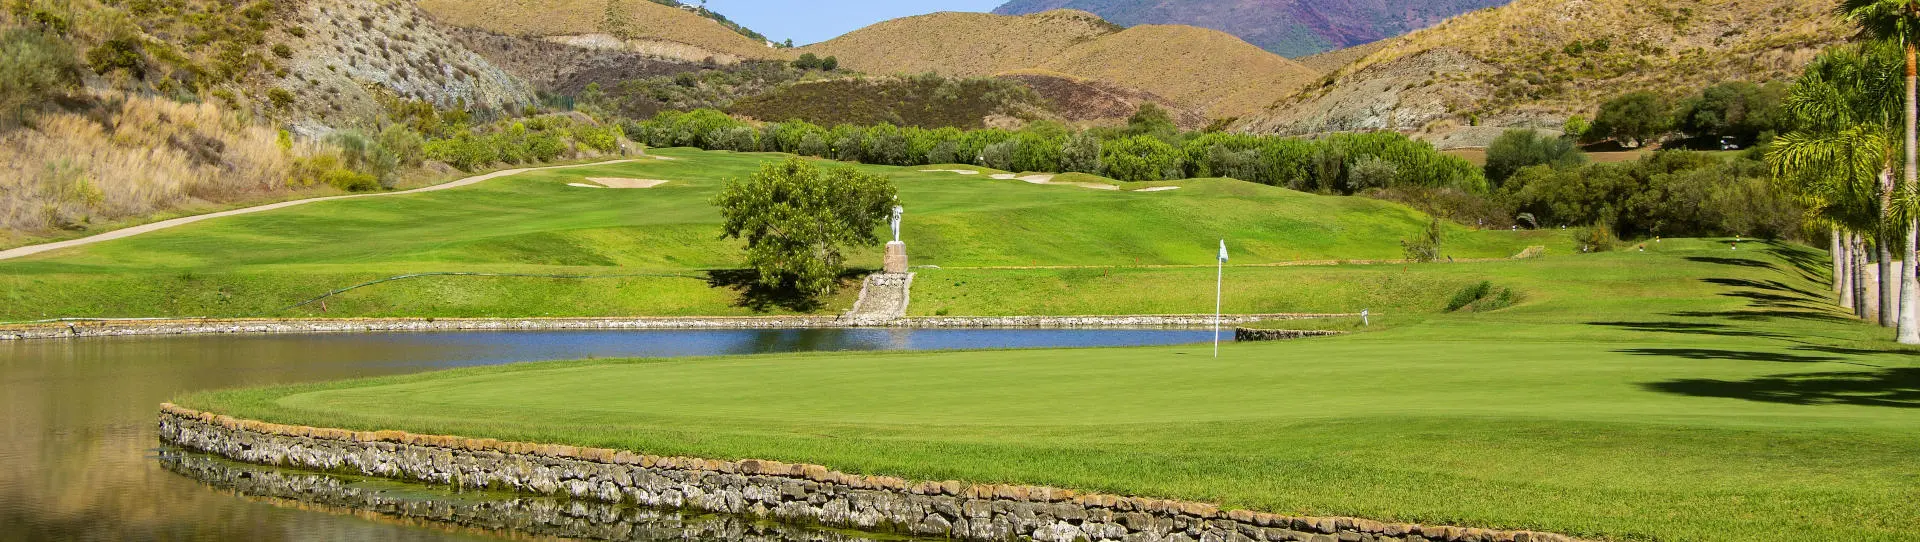 Spain golf holidays - Villa Padierna 7 Rounds Golf Pack - Photo 2